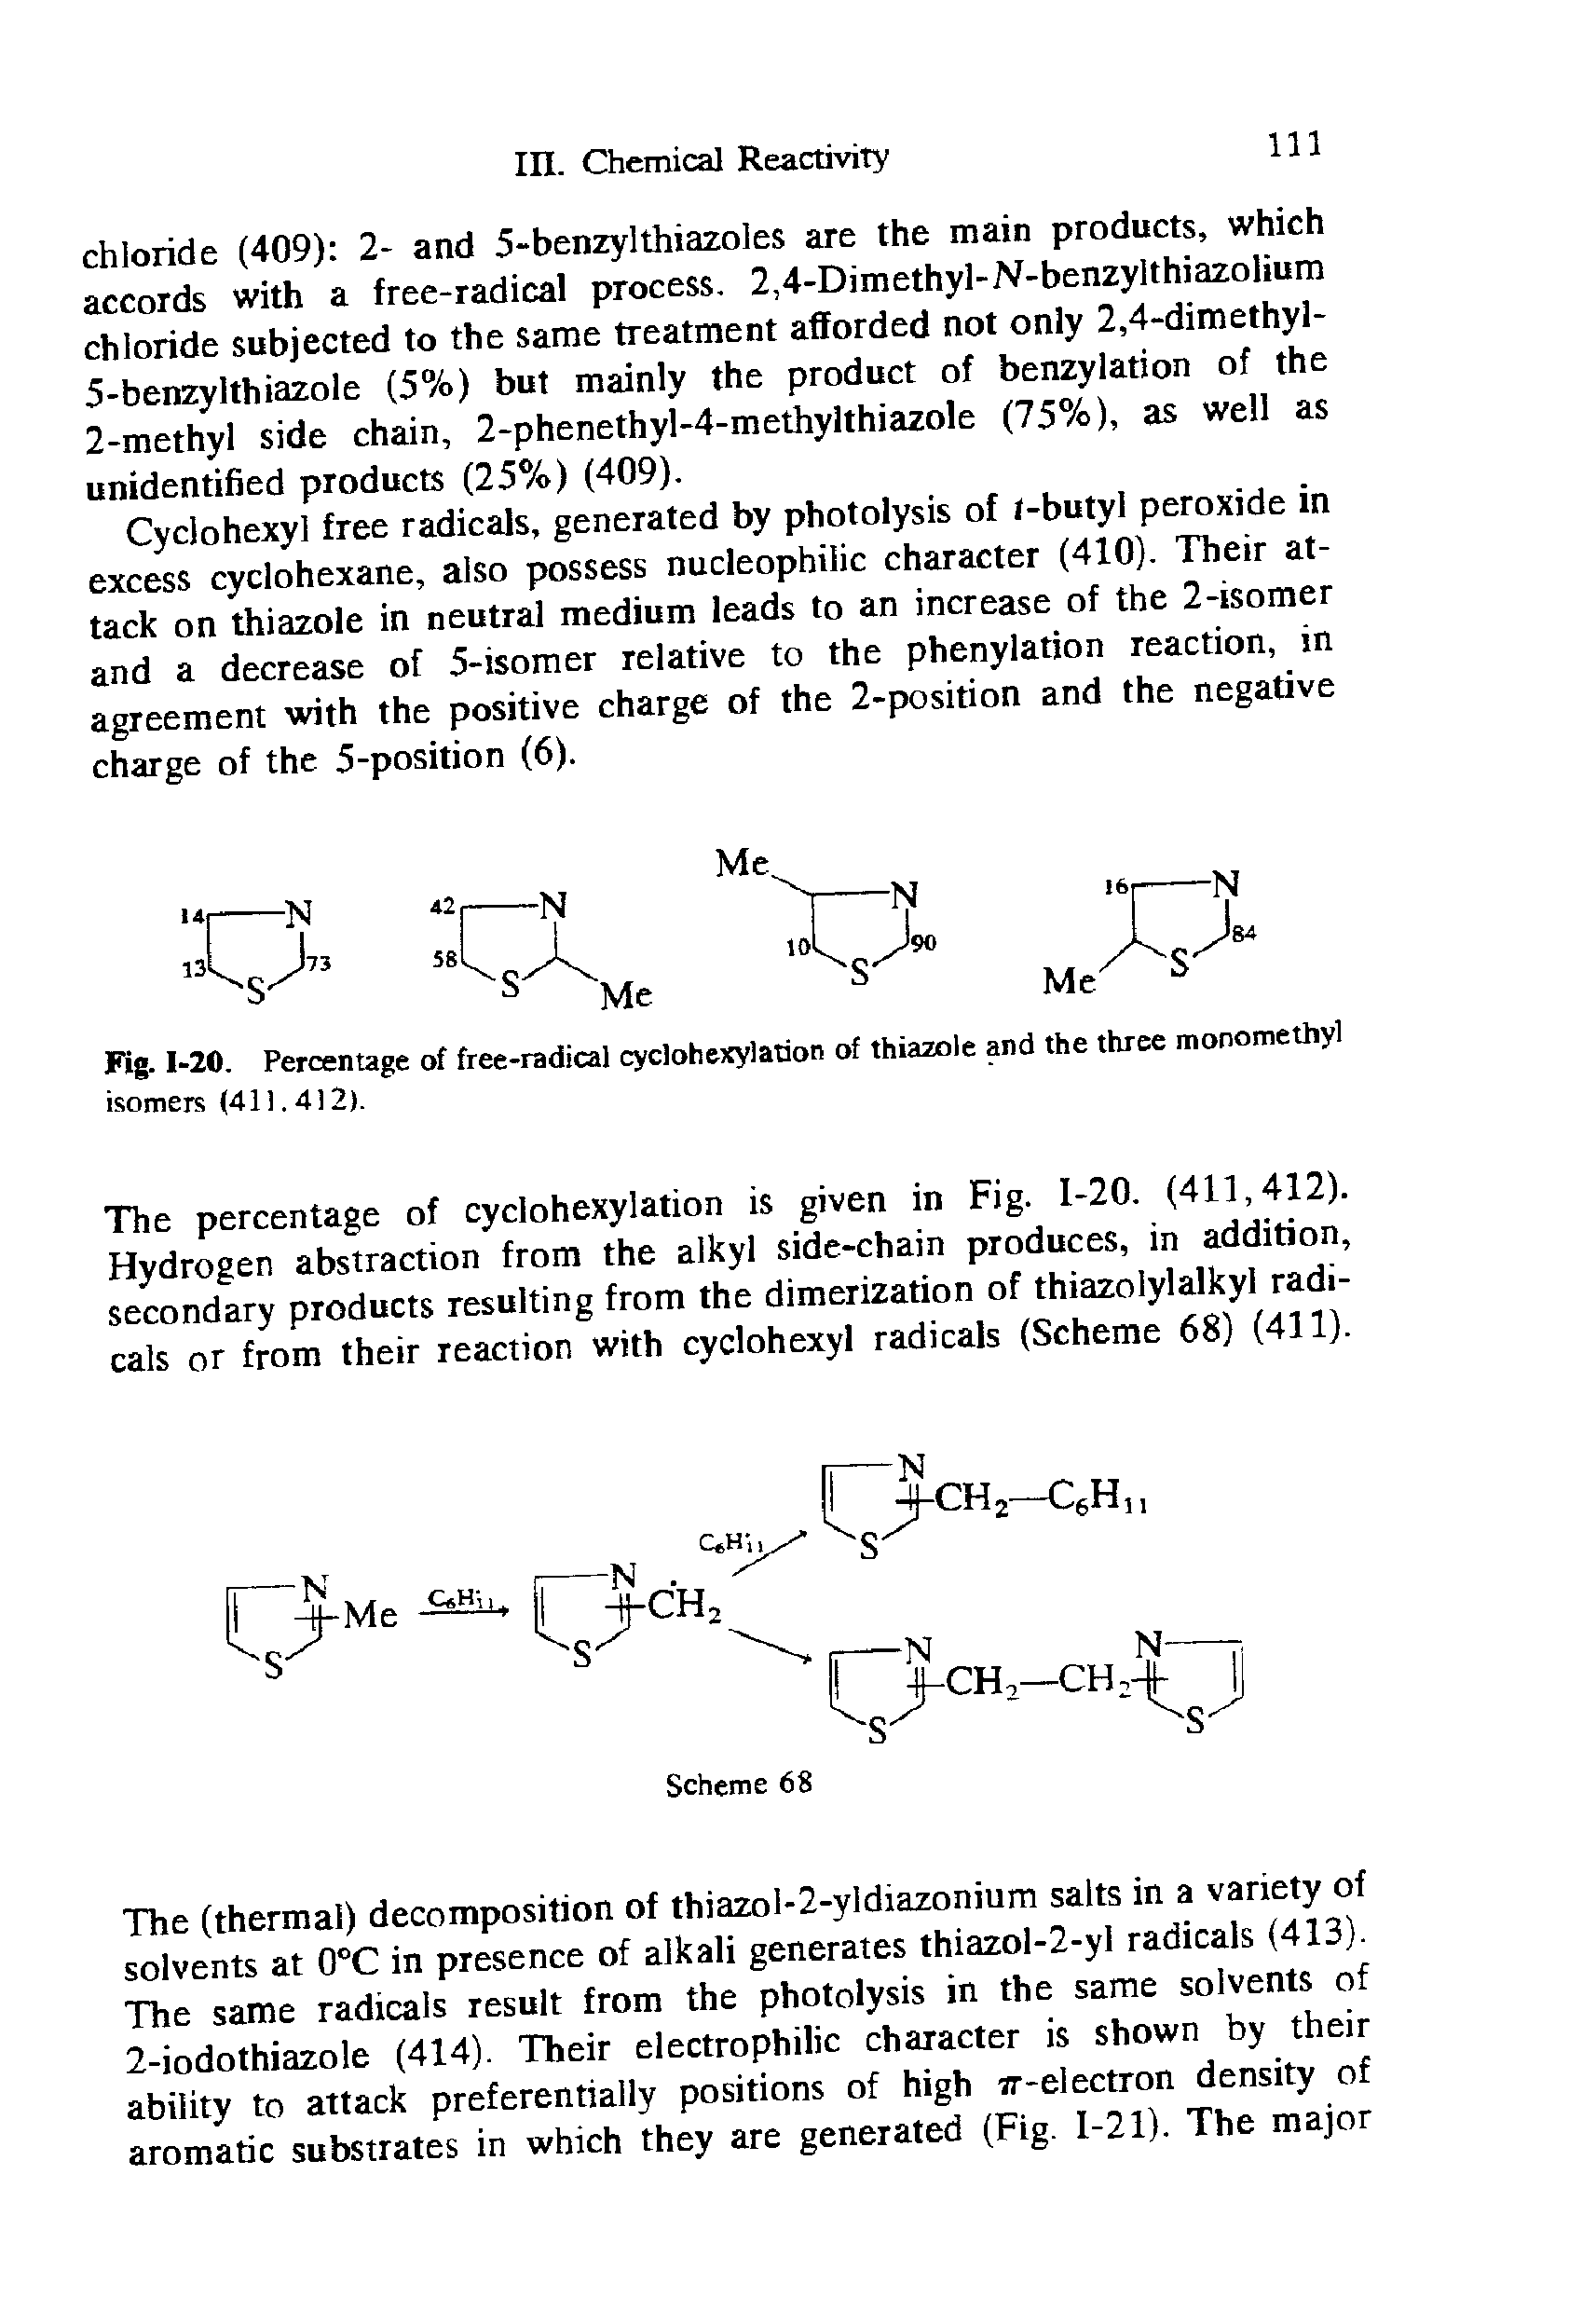 Fig. 1-20. Percentage of free-radical cyclohexylation of thiaTole and the three monometliyl isomers (411.412).